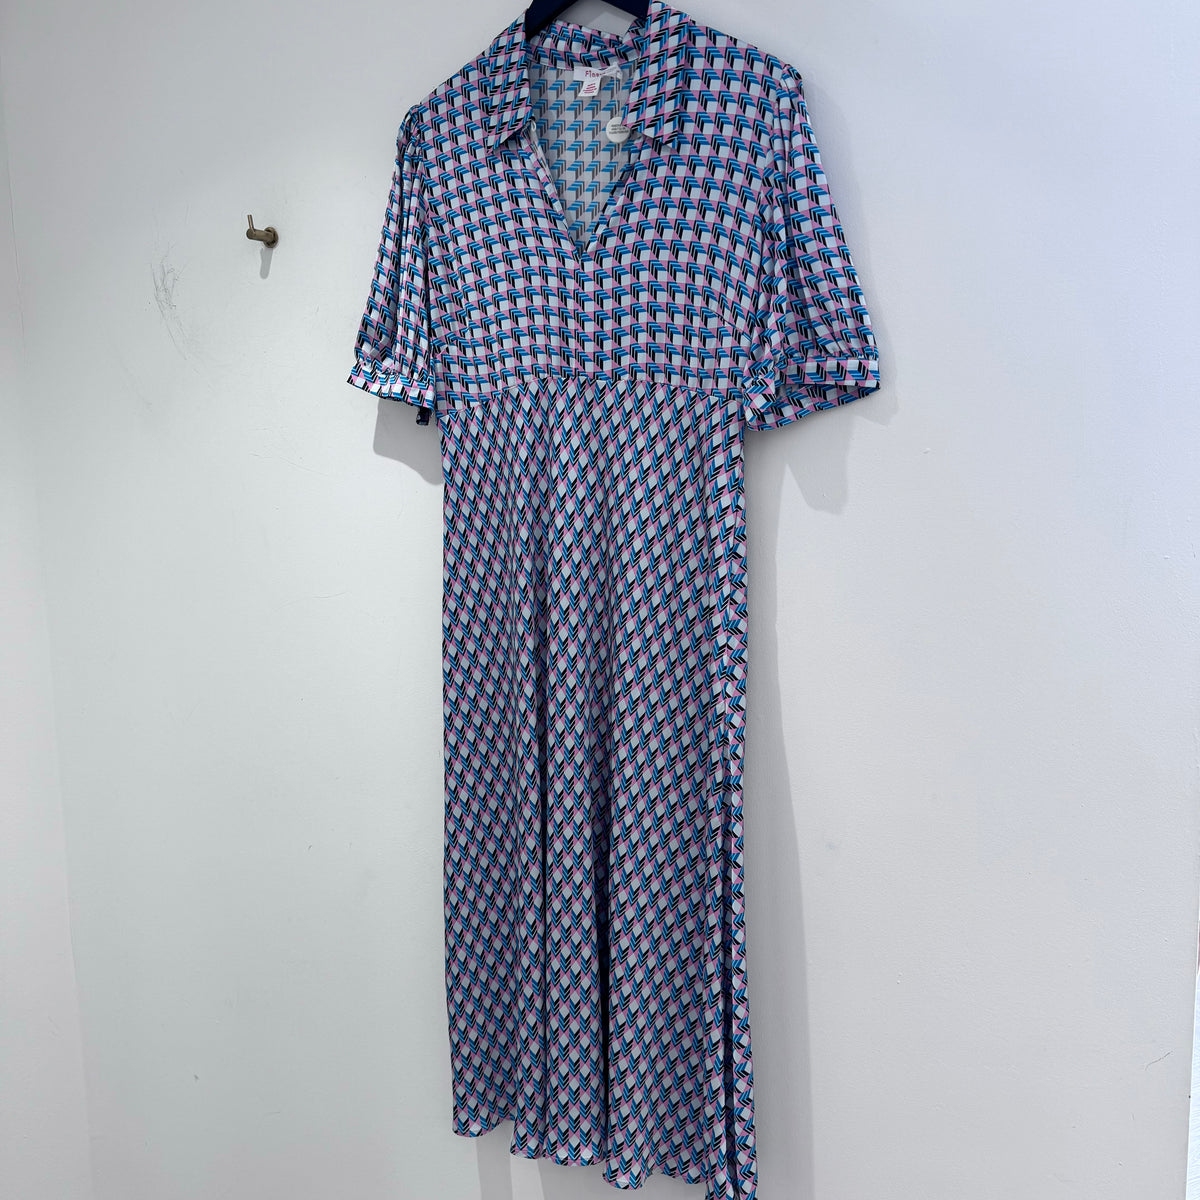 Finery print dress Choc/blue/pink 14